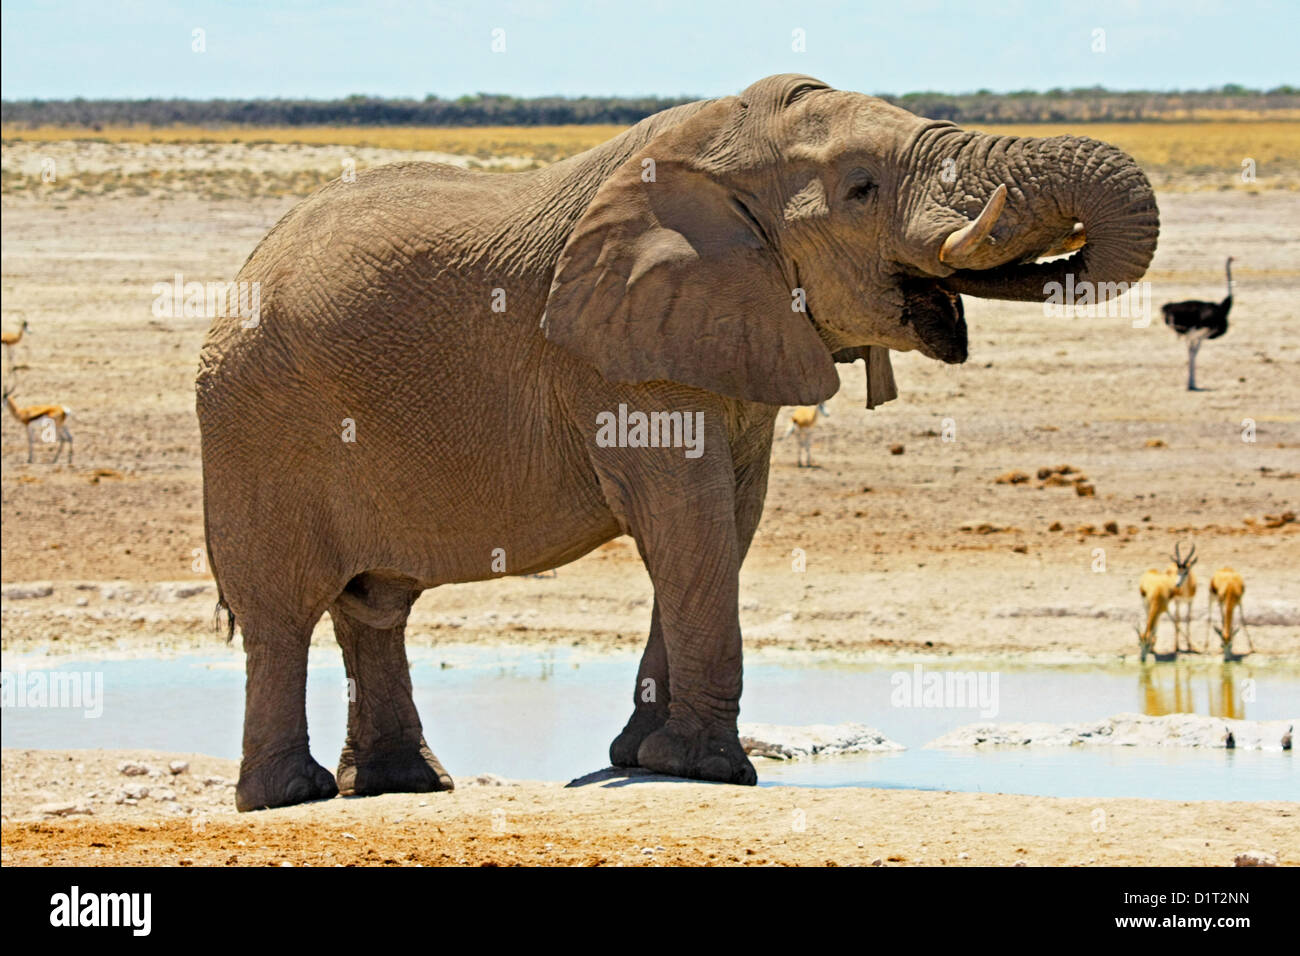 A large Bull Elephant at a waterhole in Etosha National Park, Namibia Stock Photo